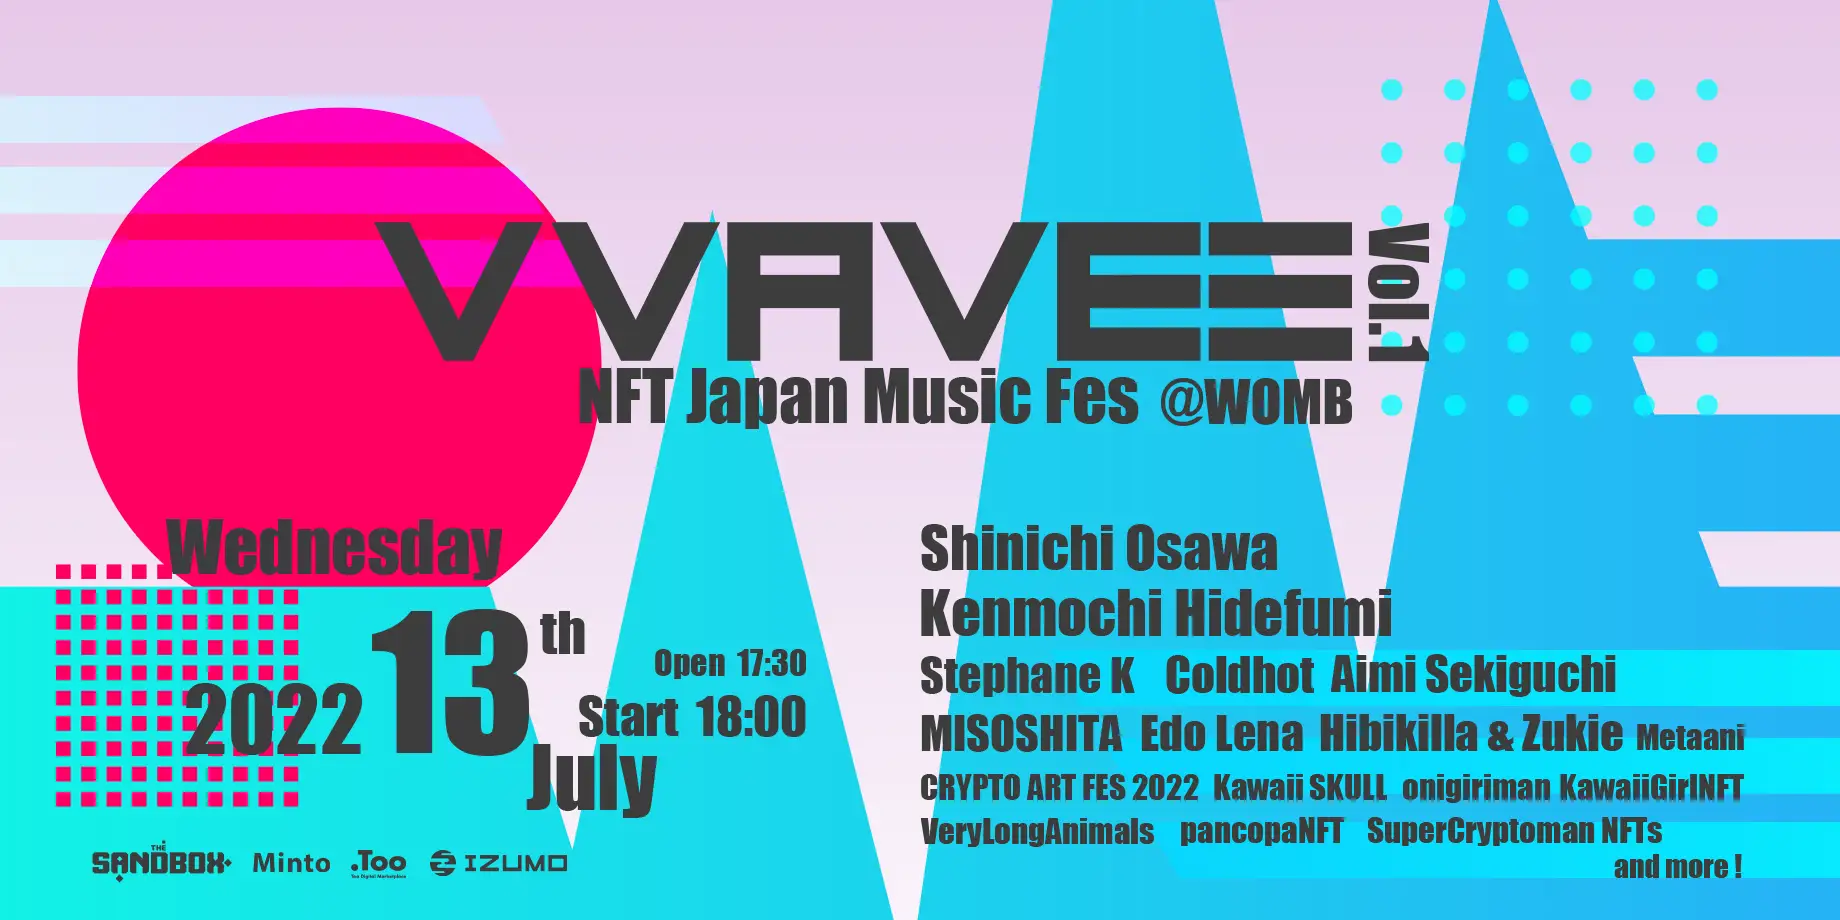 【BeyondConcept】音楽 × NFTコミュニティ「VVAVE3」、渋谷で大規模クラブイベント「VVAVE3 – NFT Japan Music Fes vol.1 -」の開催を決定！